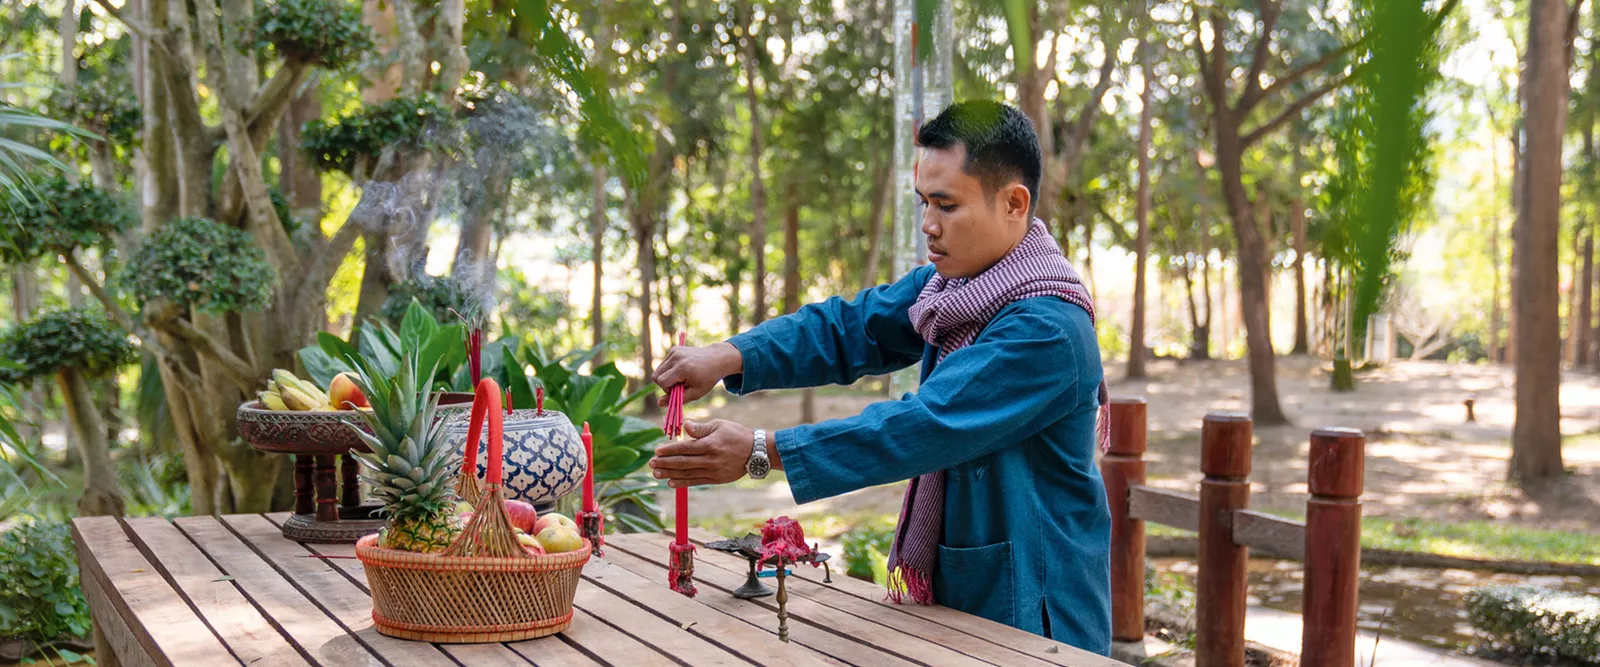 Тайландец зажигает свечи в лесу